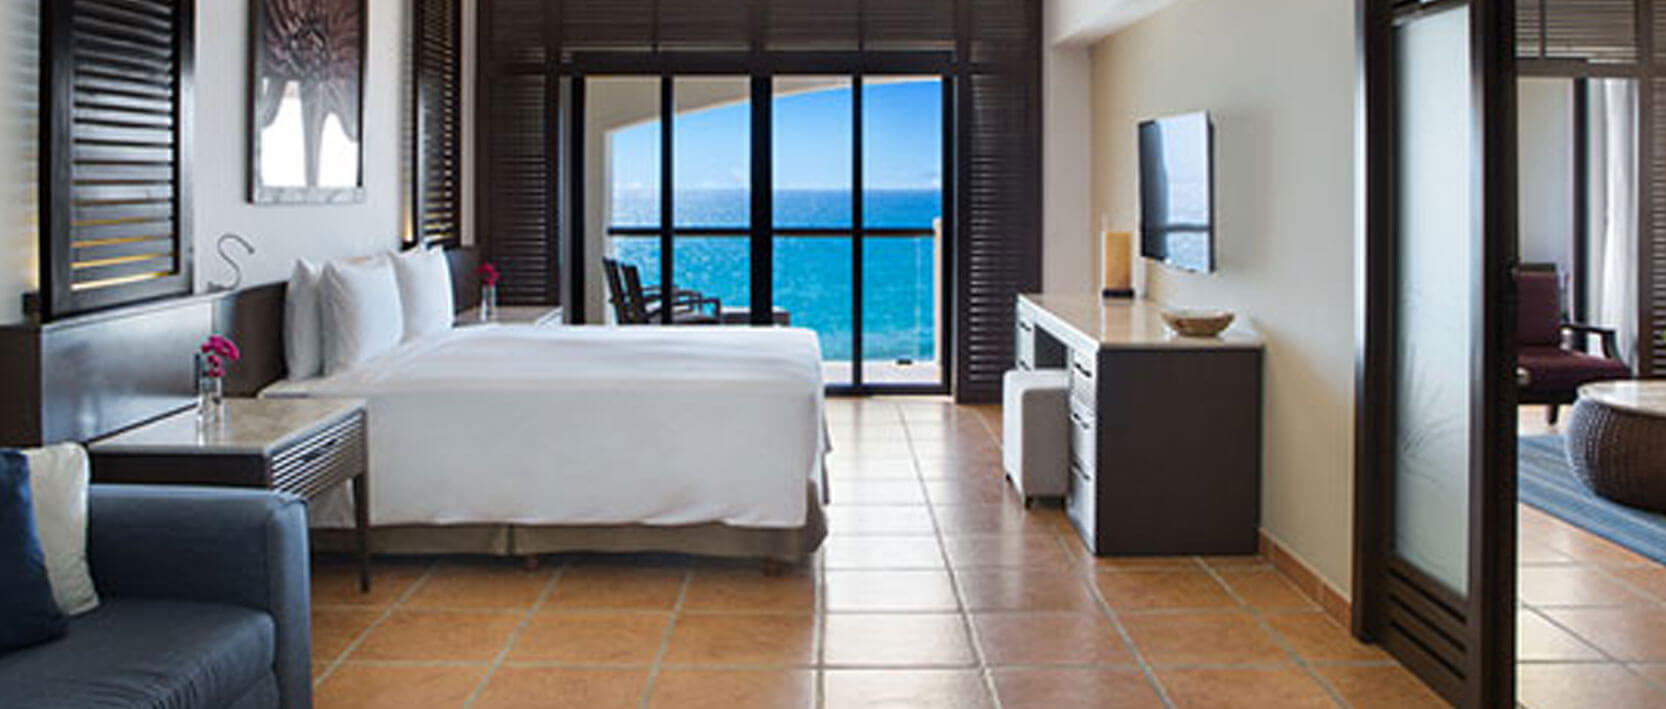 Hyatt Ziva Los Cabos Accommodations - Oceanfront One Bedroom Master Suite